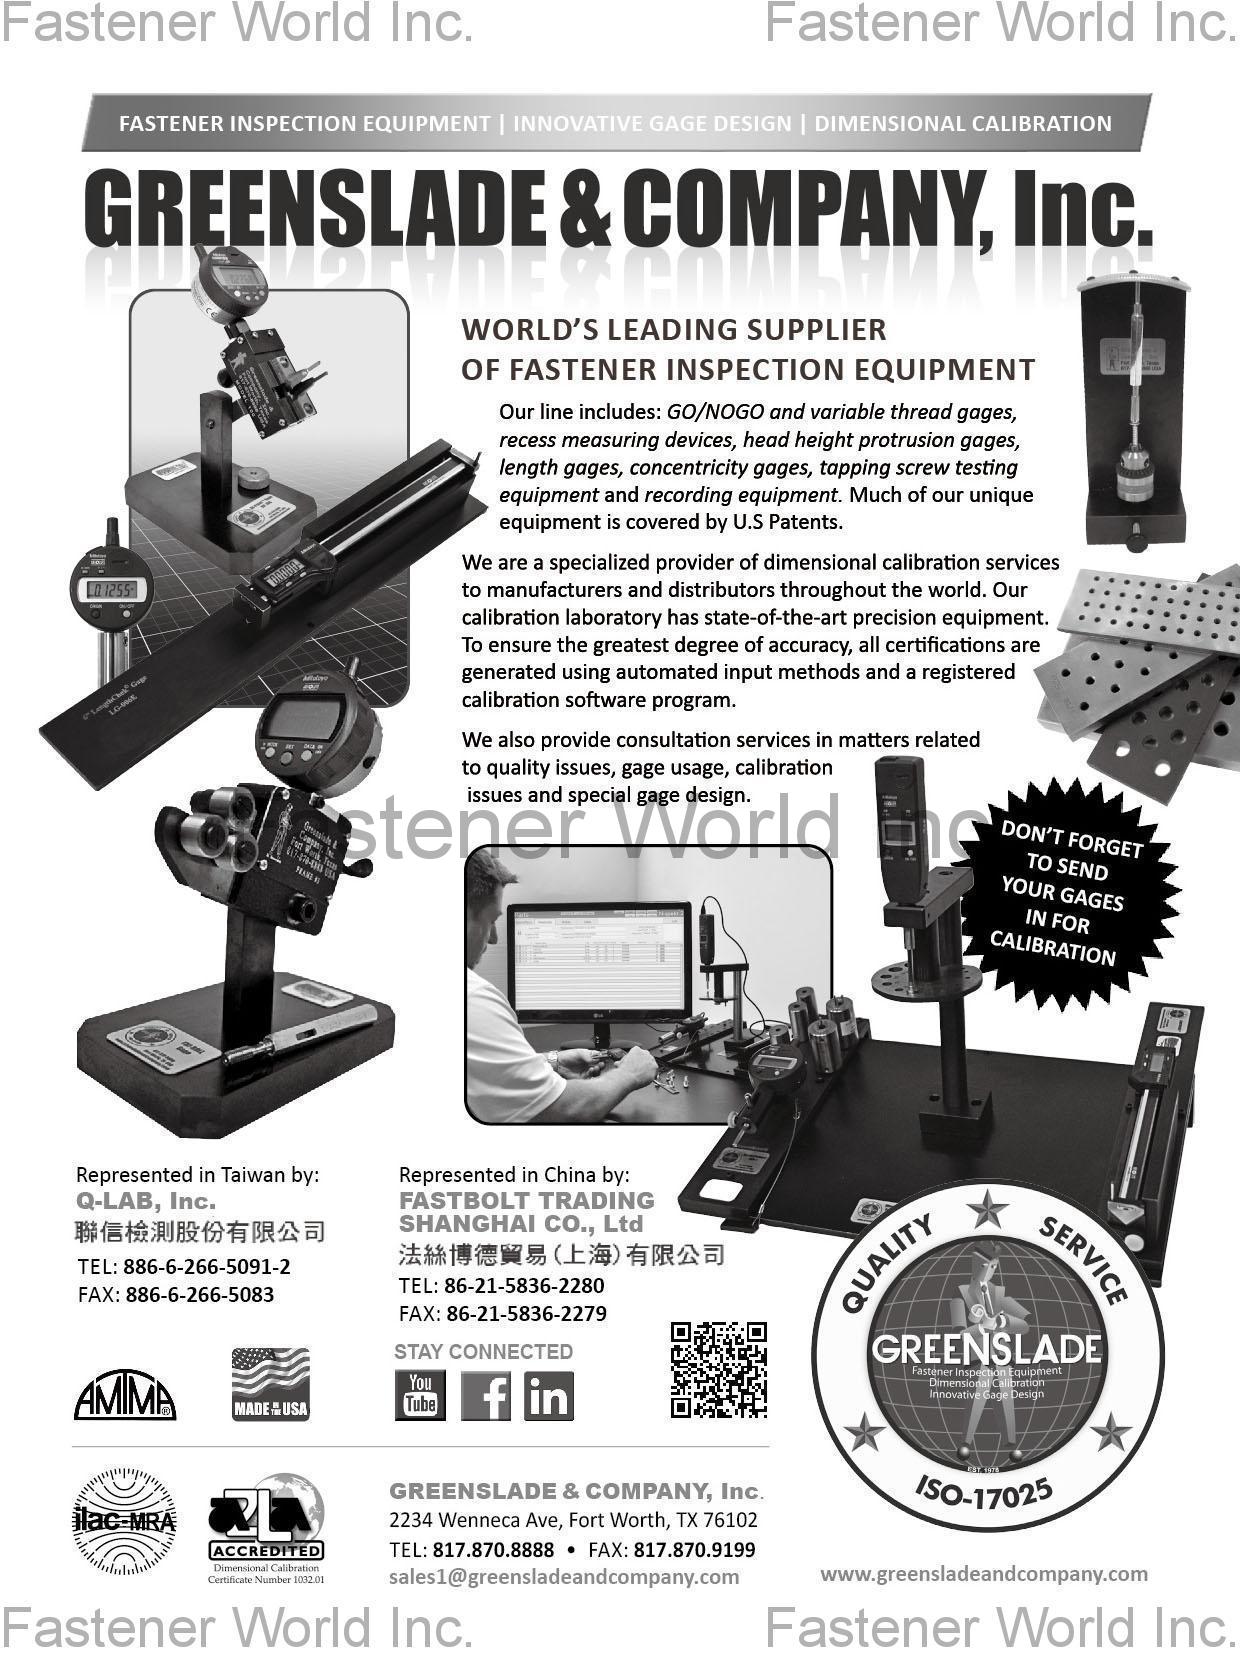 GREENSLADE & COMPANY, INC. , Fastener Inspection Equipment, Innovative Gage Design, Dimensional Calibration , Spec Inspection